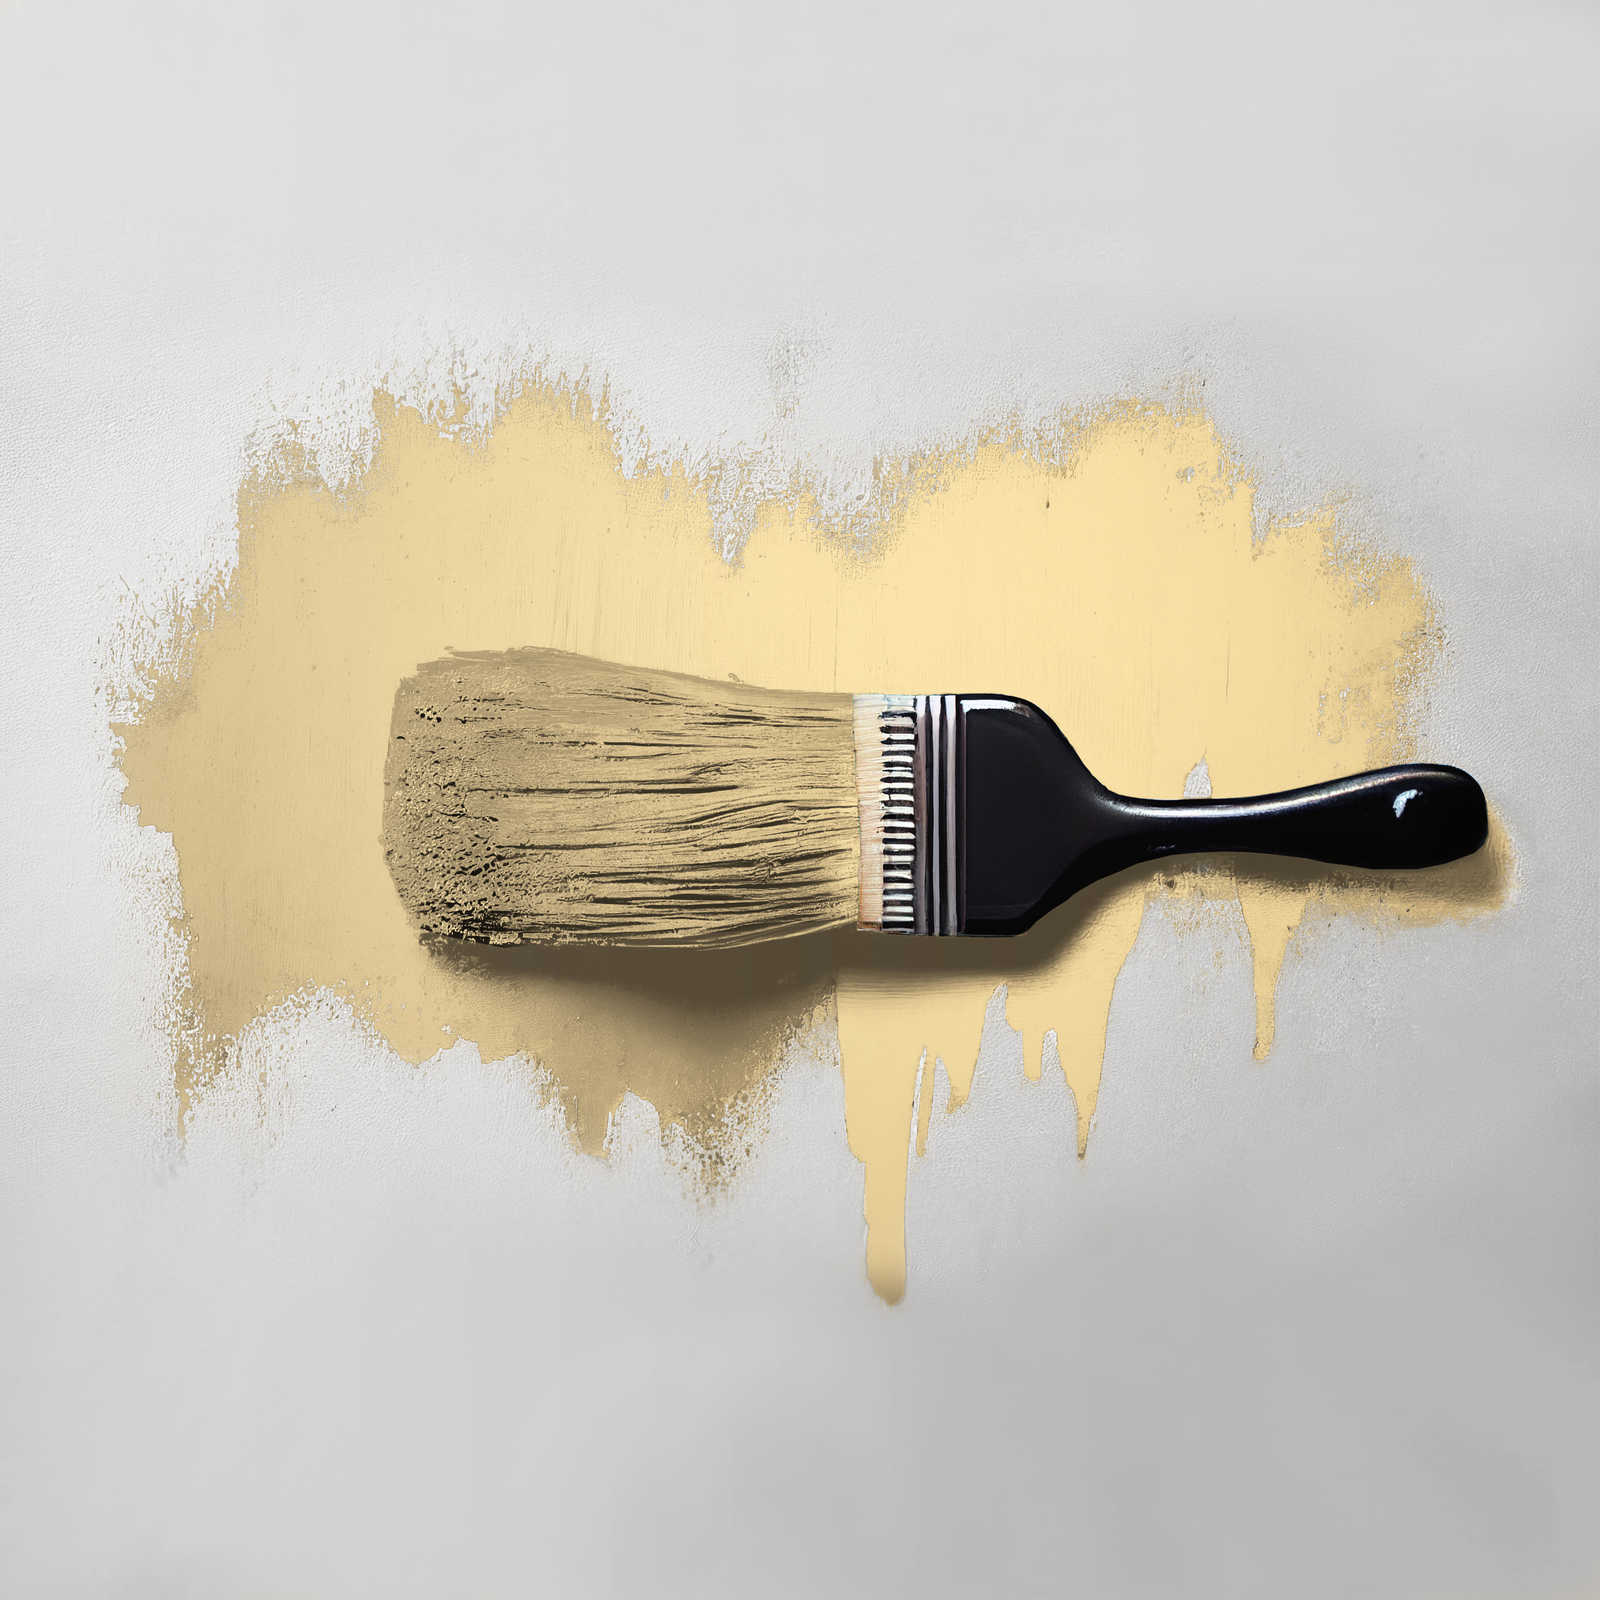             Pittura murale TCK5004 »Gentel Ginger« in giallo delicato – 5,0 litri
        